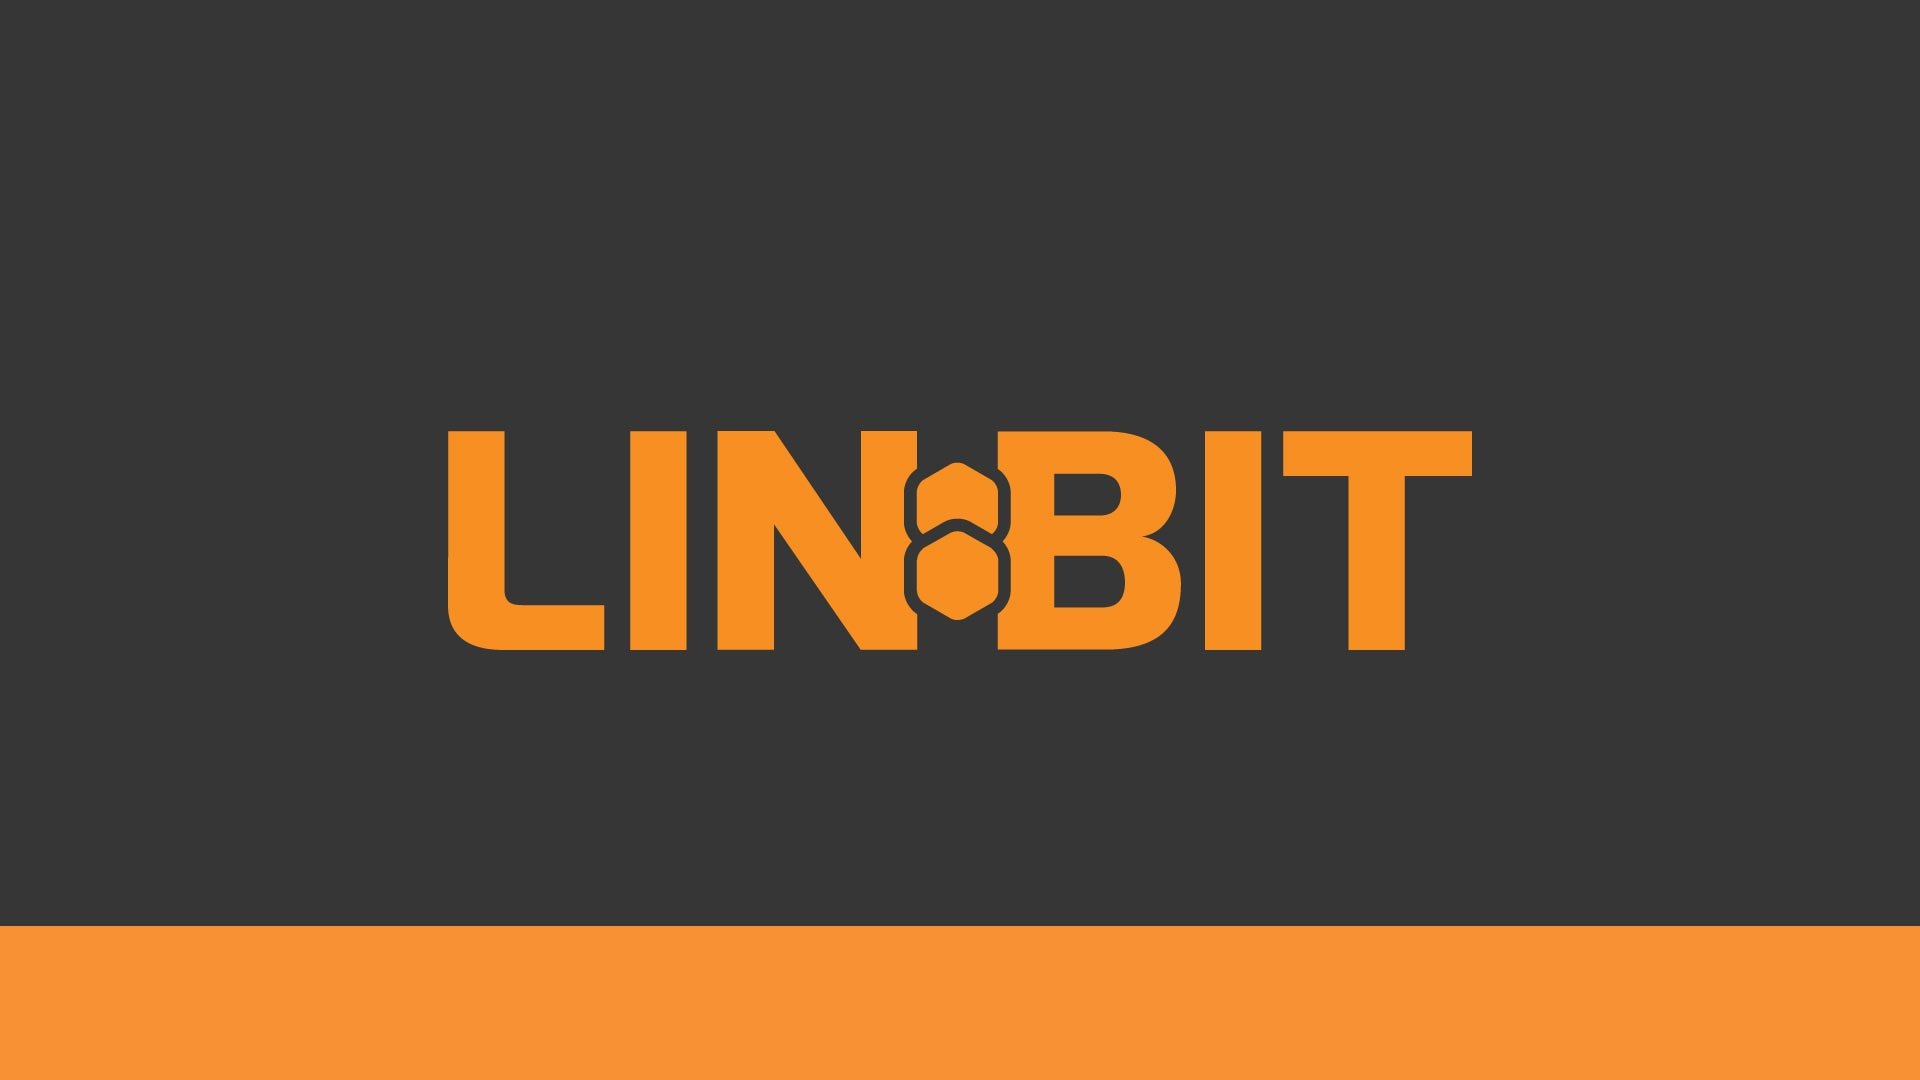 LINBIT featured image